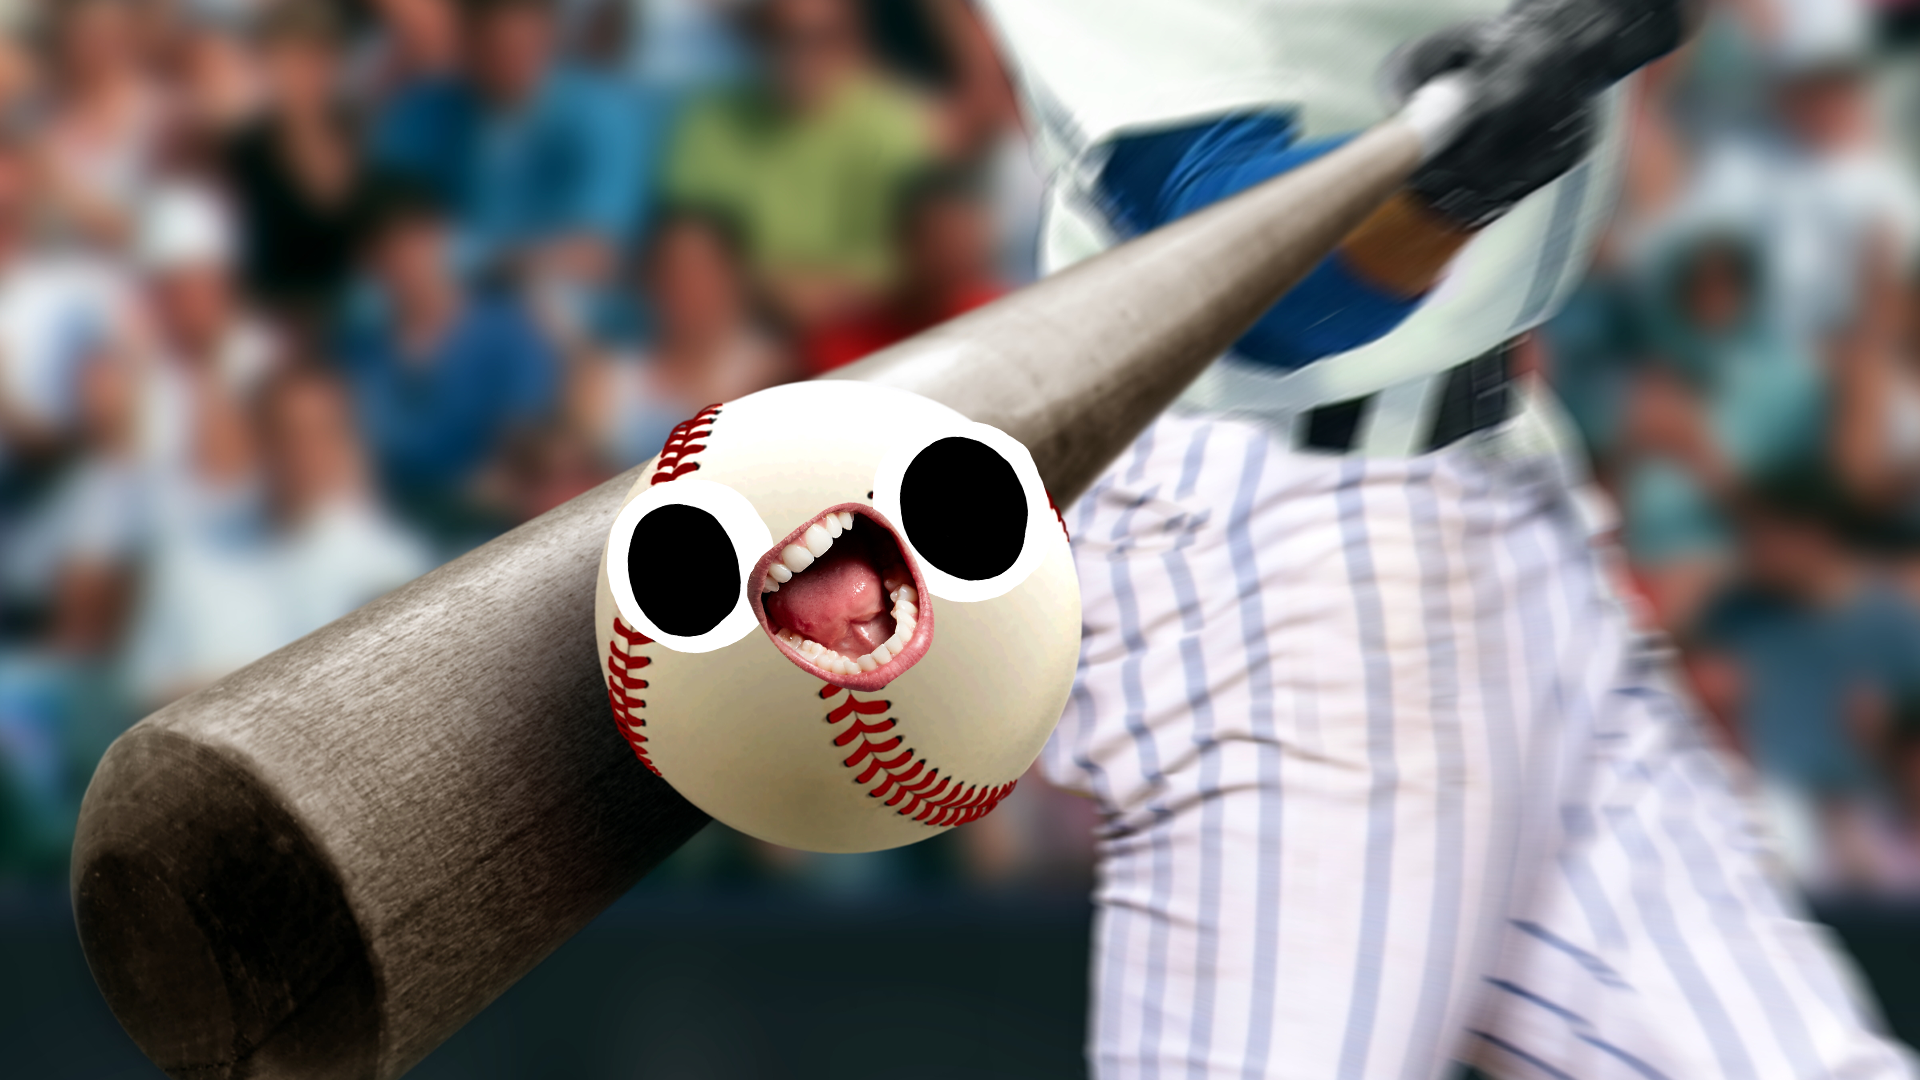 A screaming baseball being hit with a baseball bat